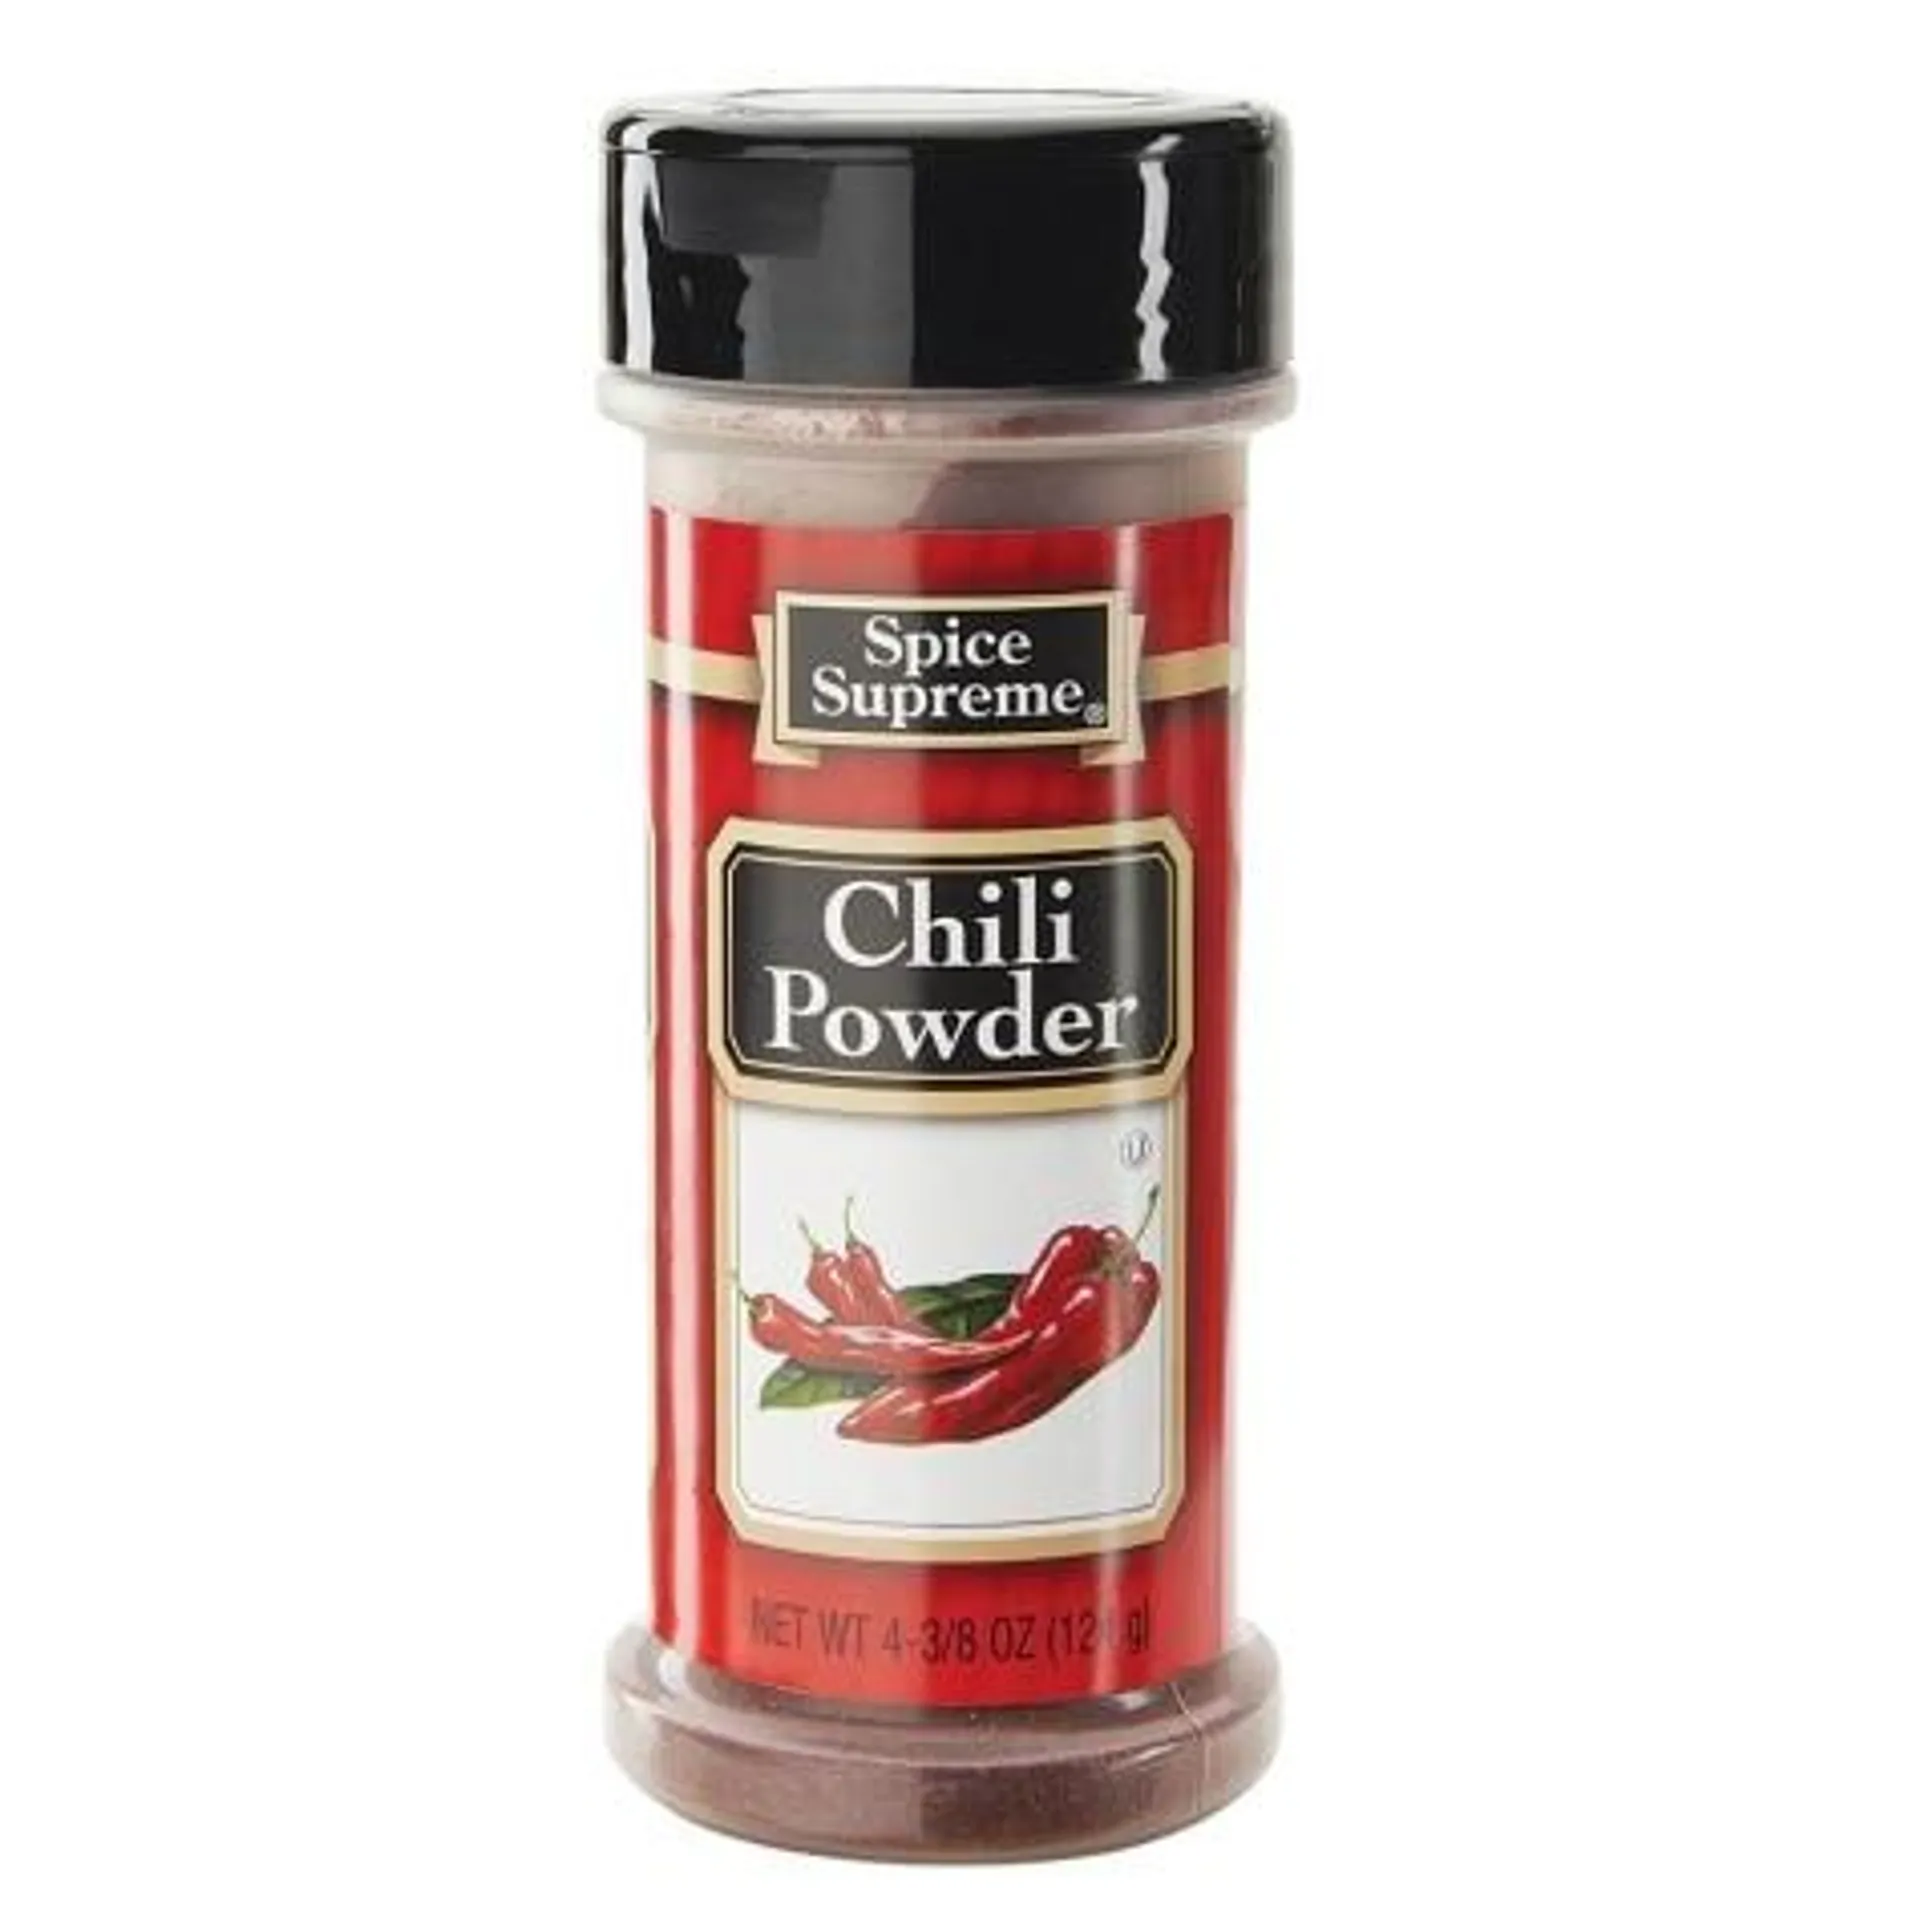 Spice Supreme Chili Powder, 4.37 oz